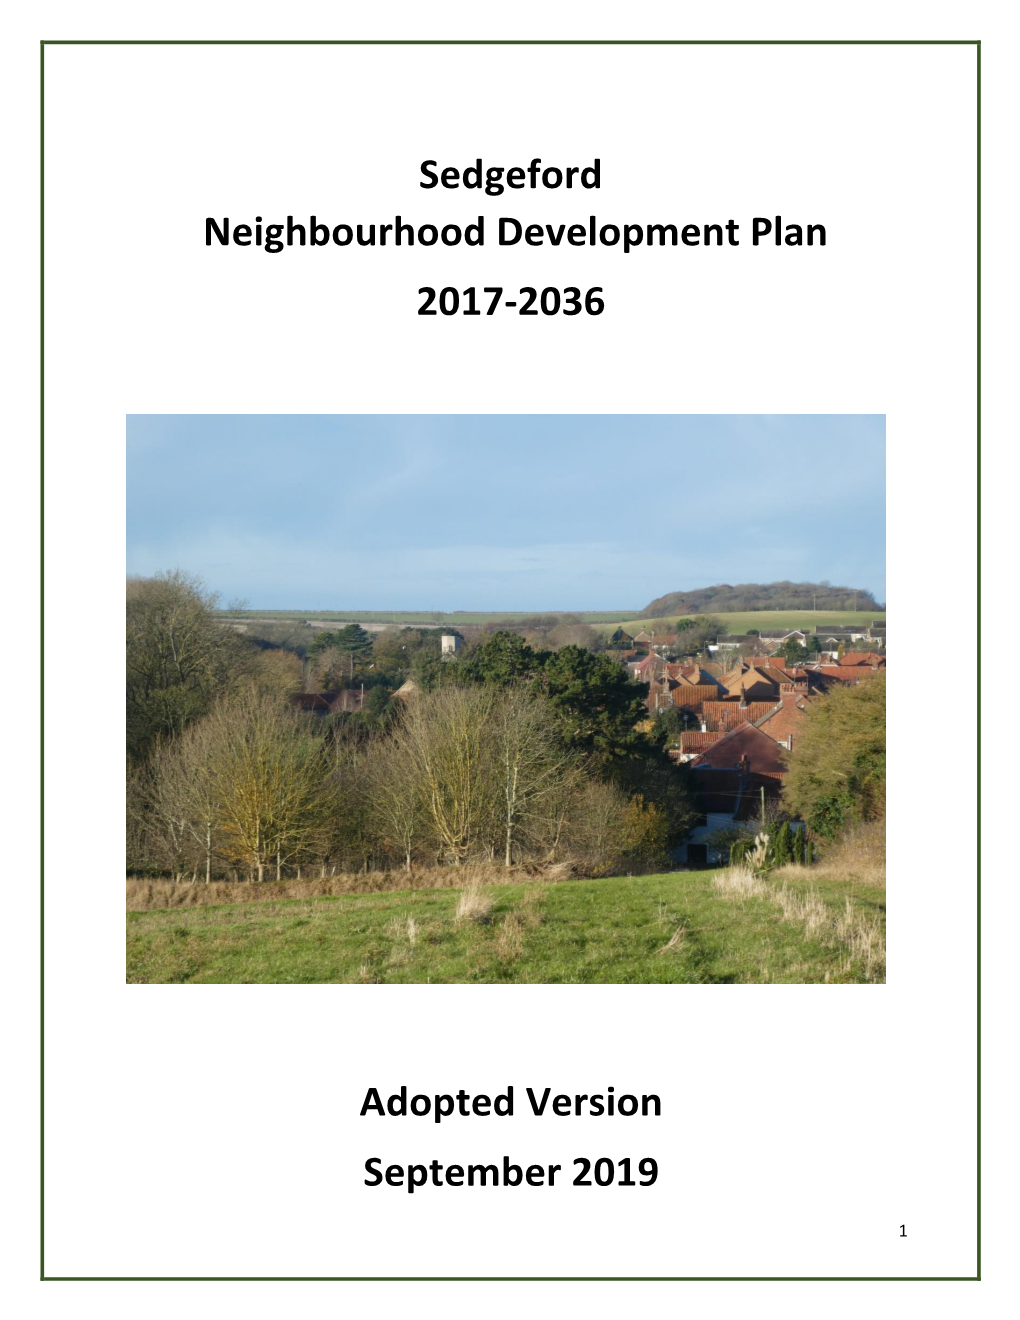 View the Sedgeford Neighbourhood Plan